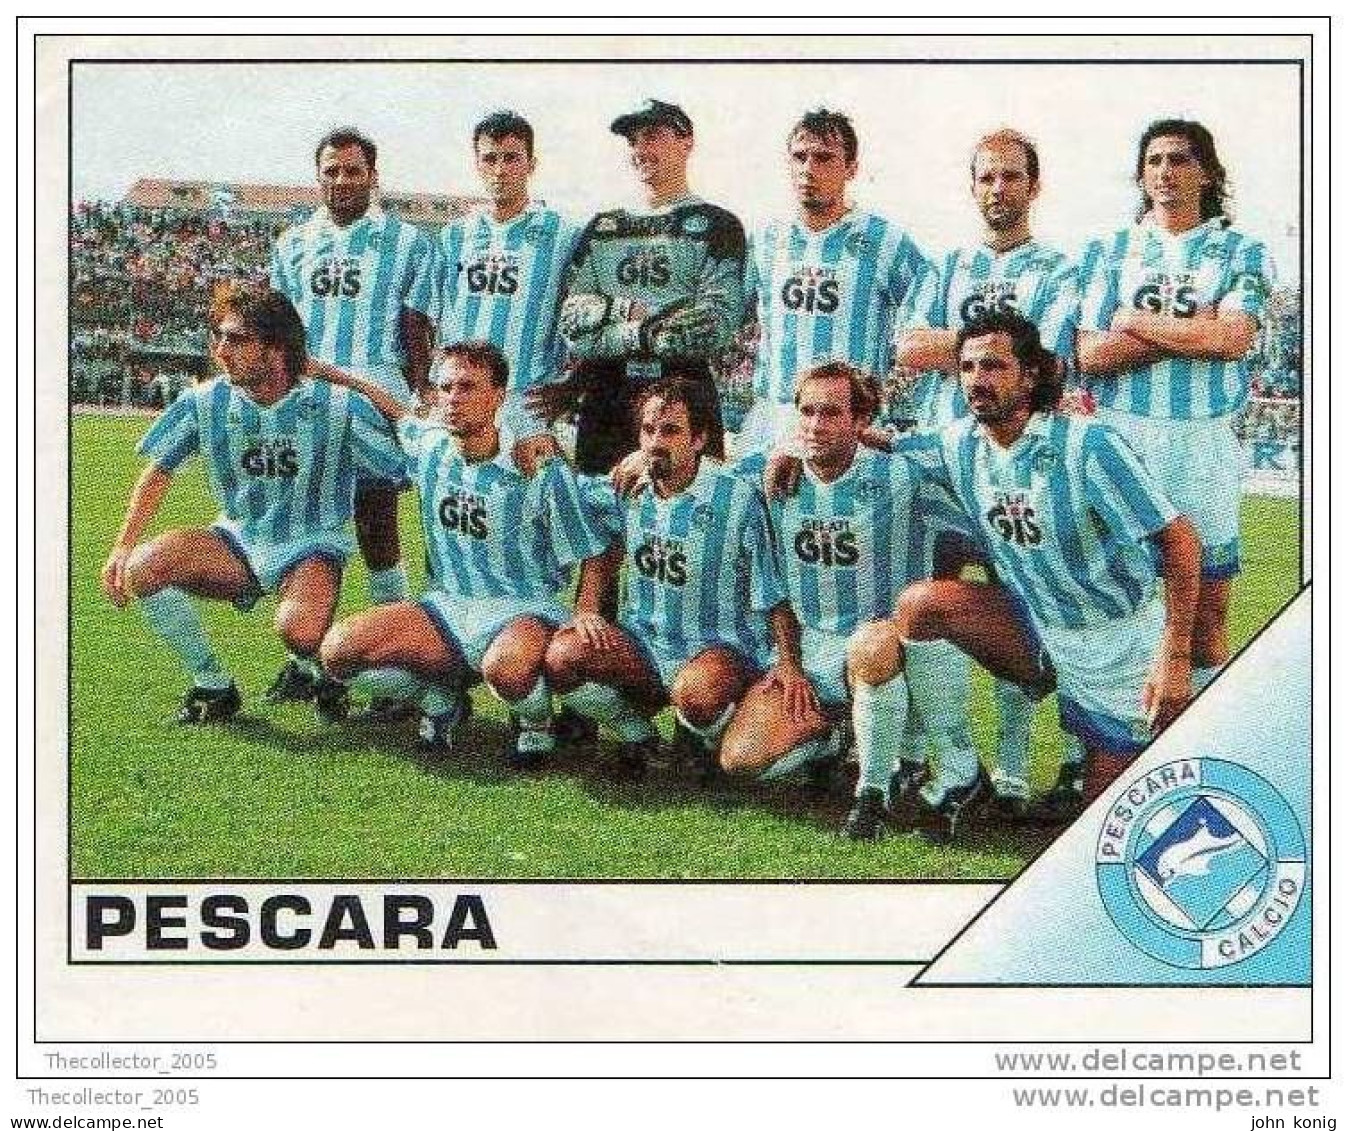 CALCIATORI - CALCIO Figurine Panini-calciatori 1995-96-n.460 (Pescara) - NUOVA-MAI INCOLLATA - Italienische Ausgabe